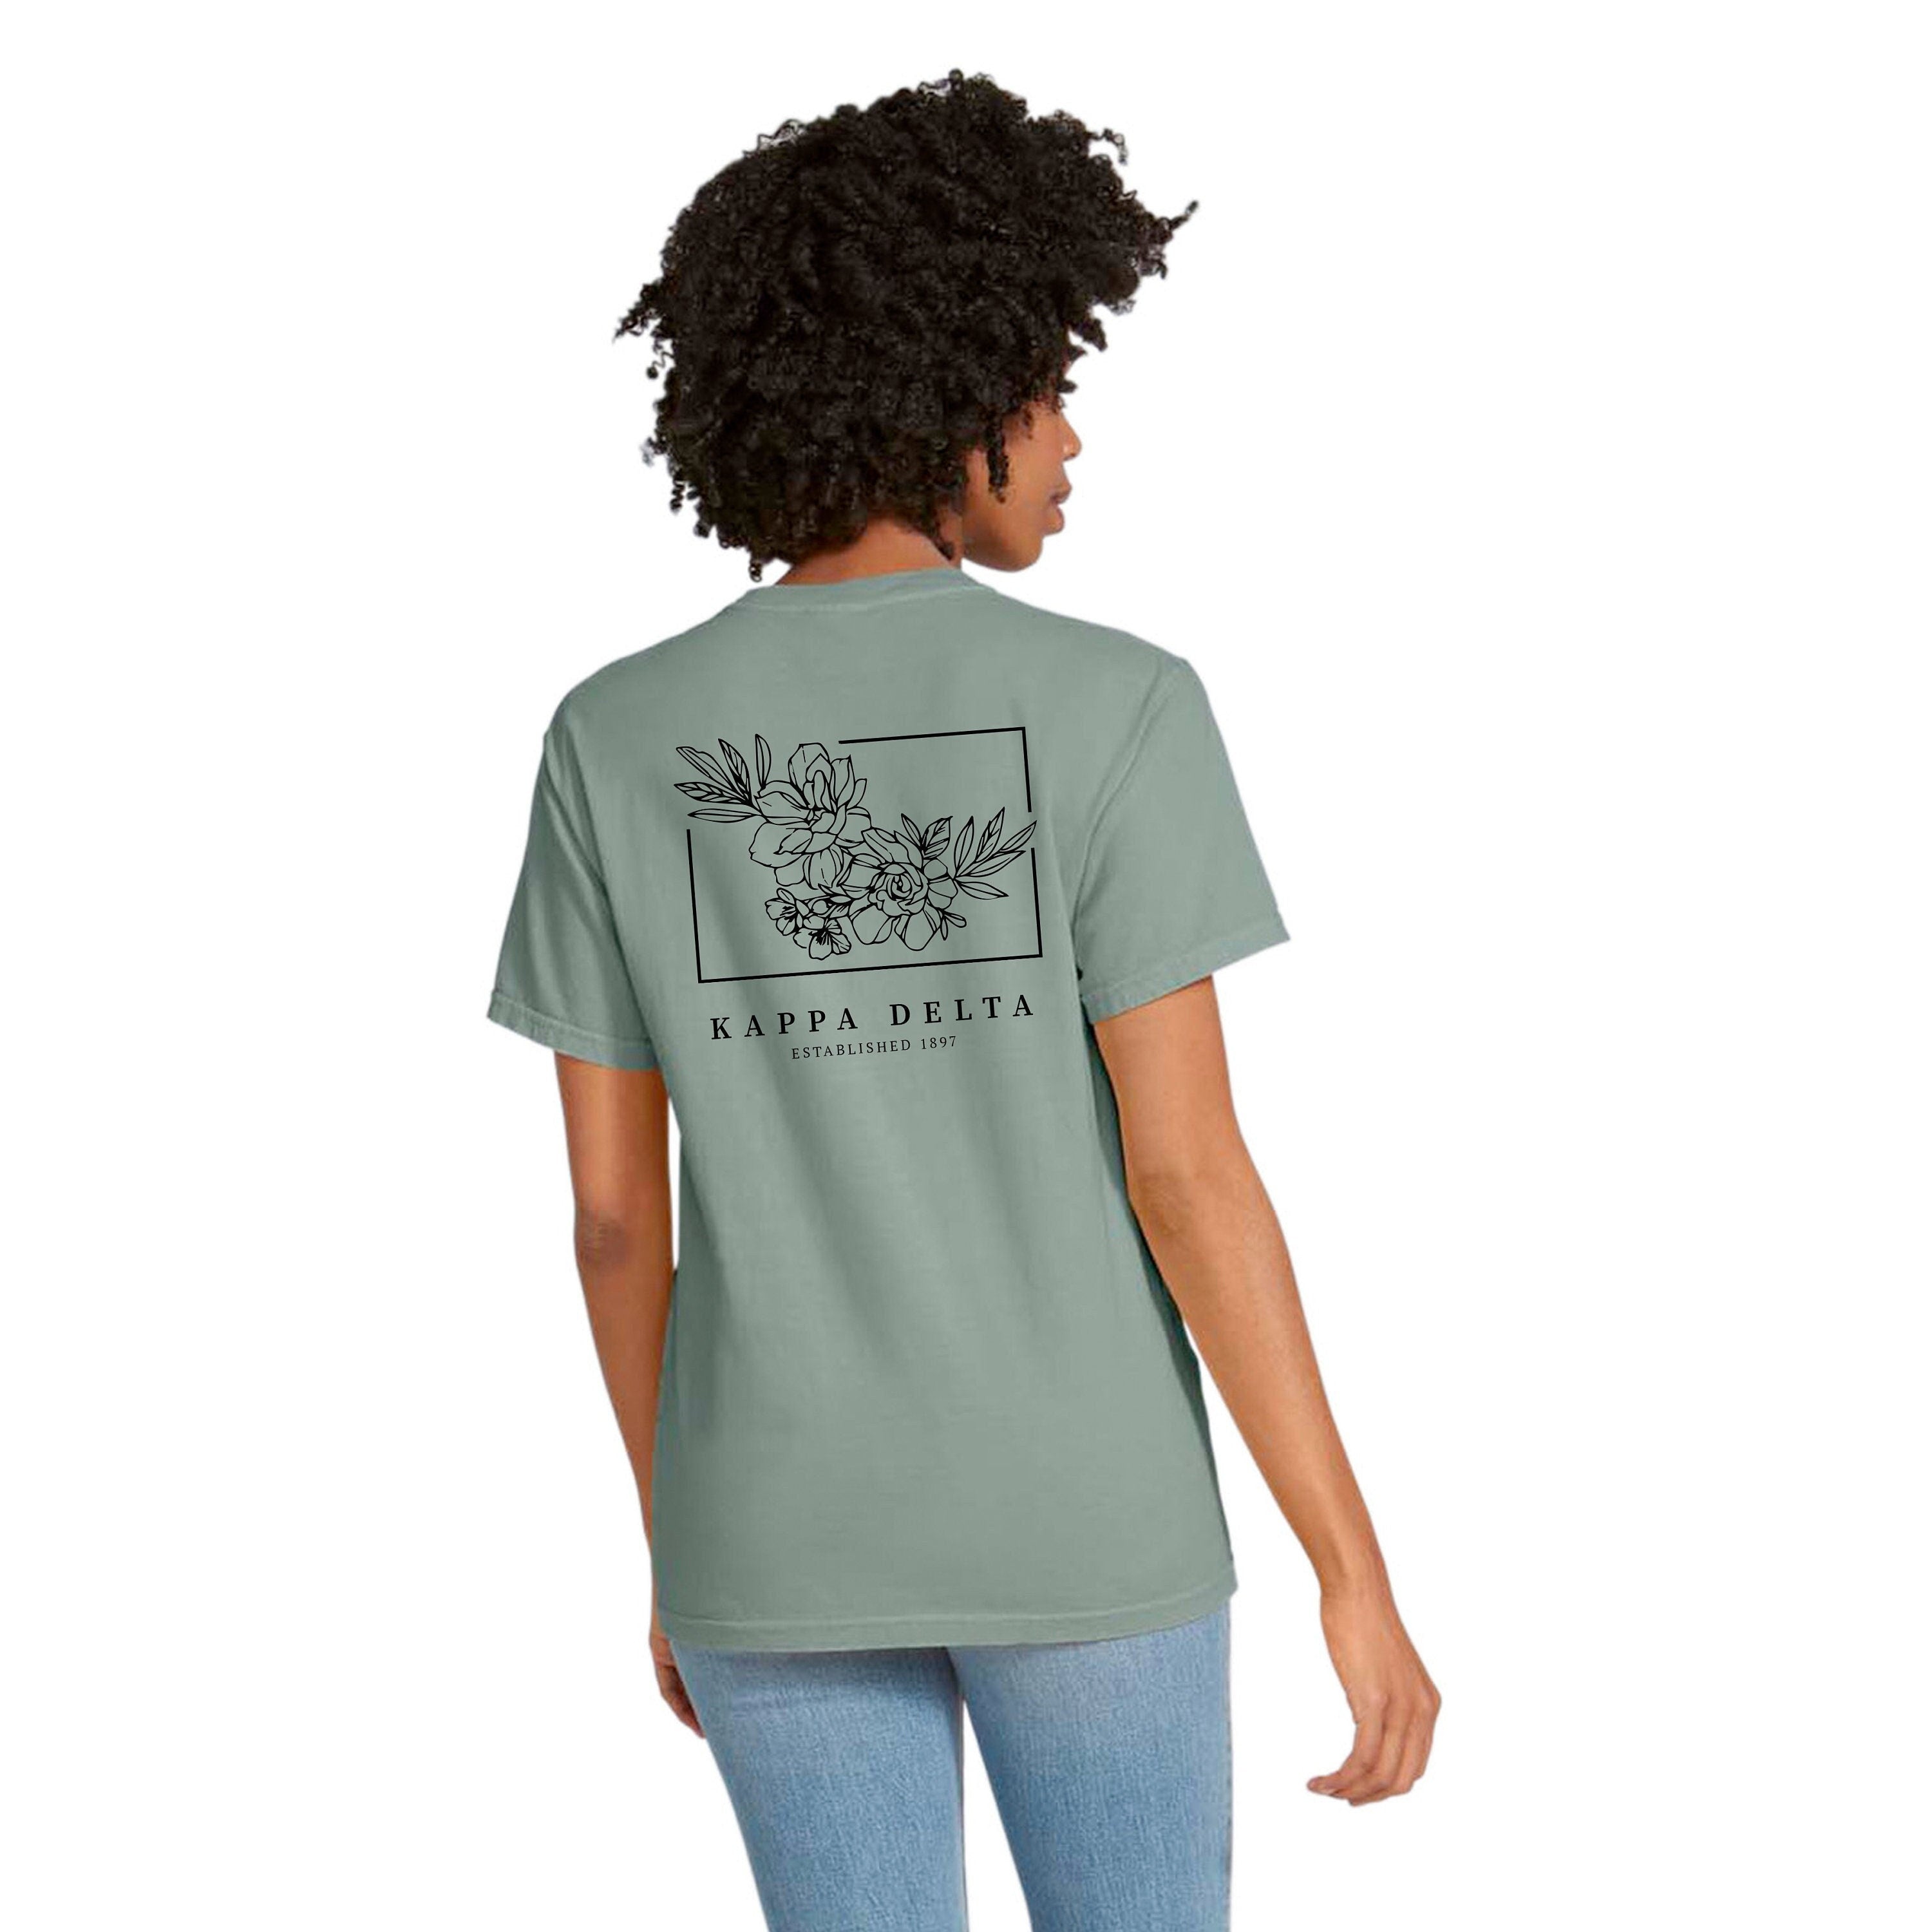 Kappa Delta Rose Flower Shirt - Sage, Back Print Only, Sorority Gift - Go Greek Chic